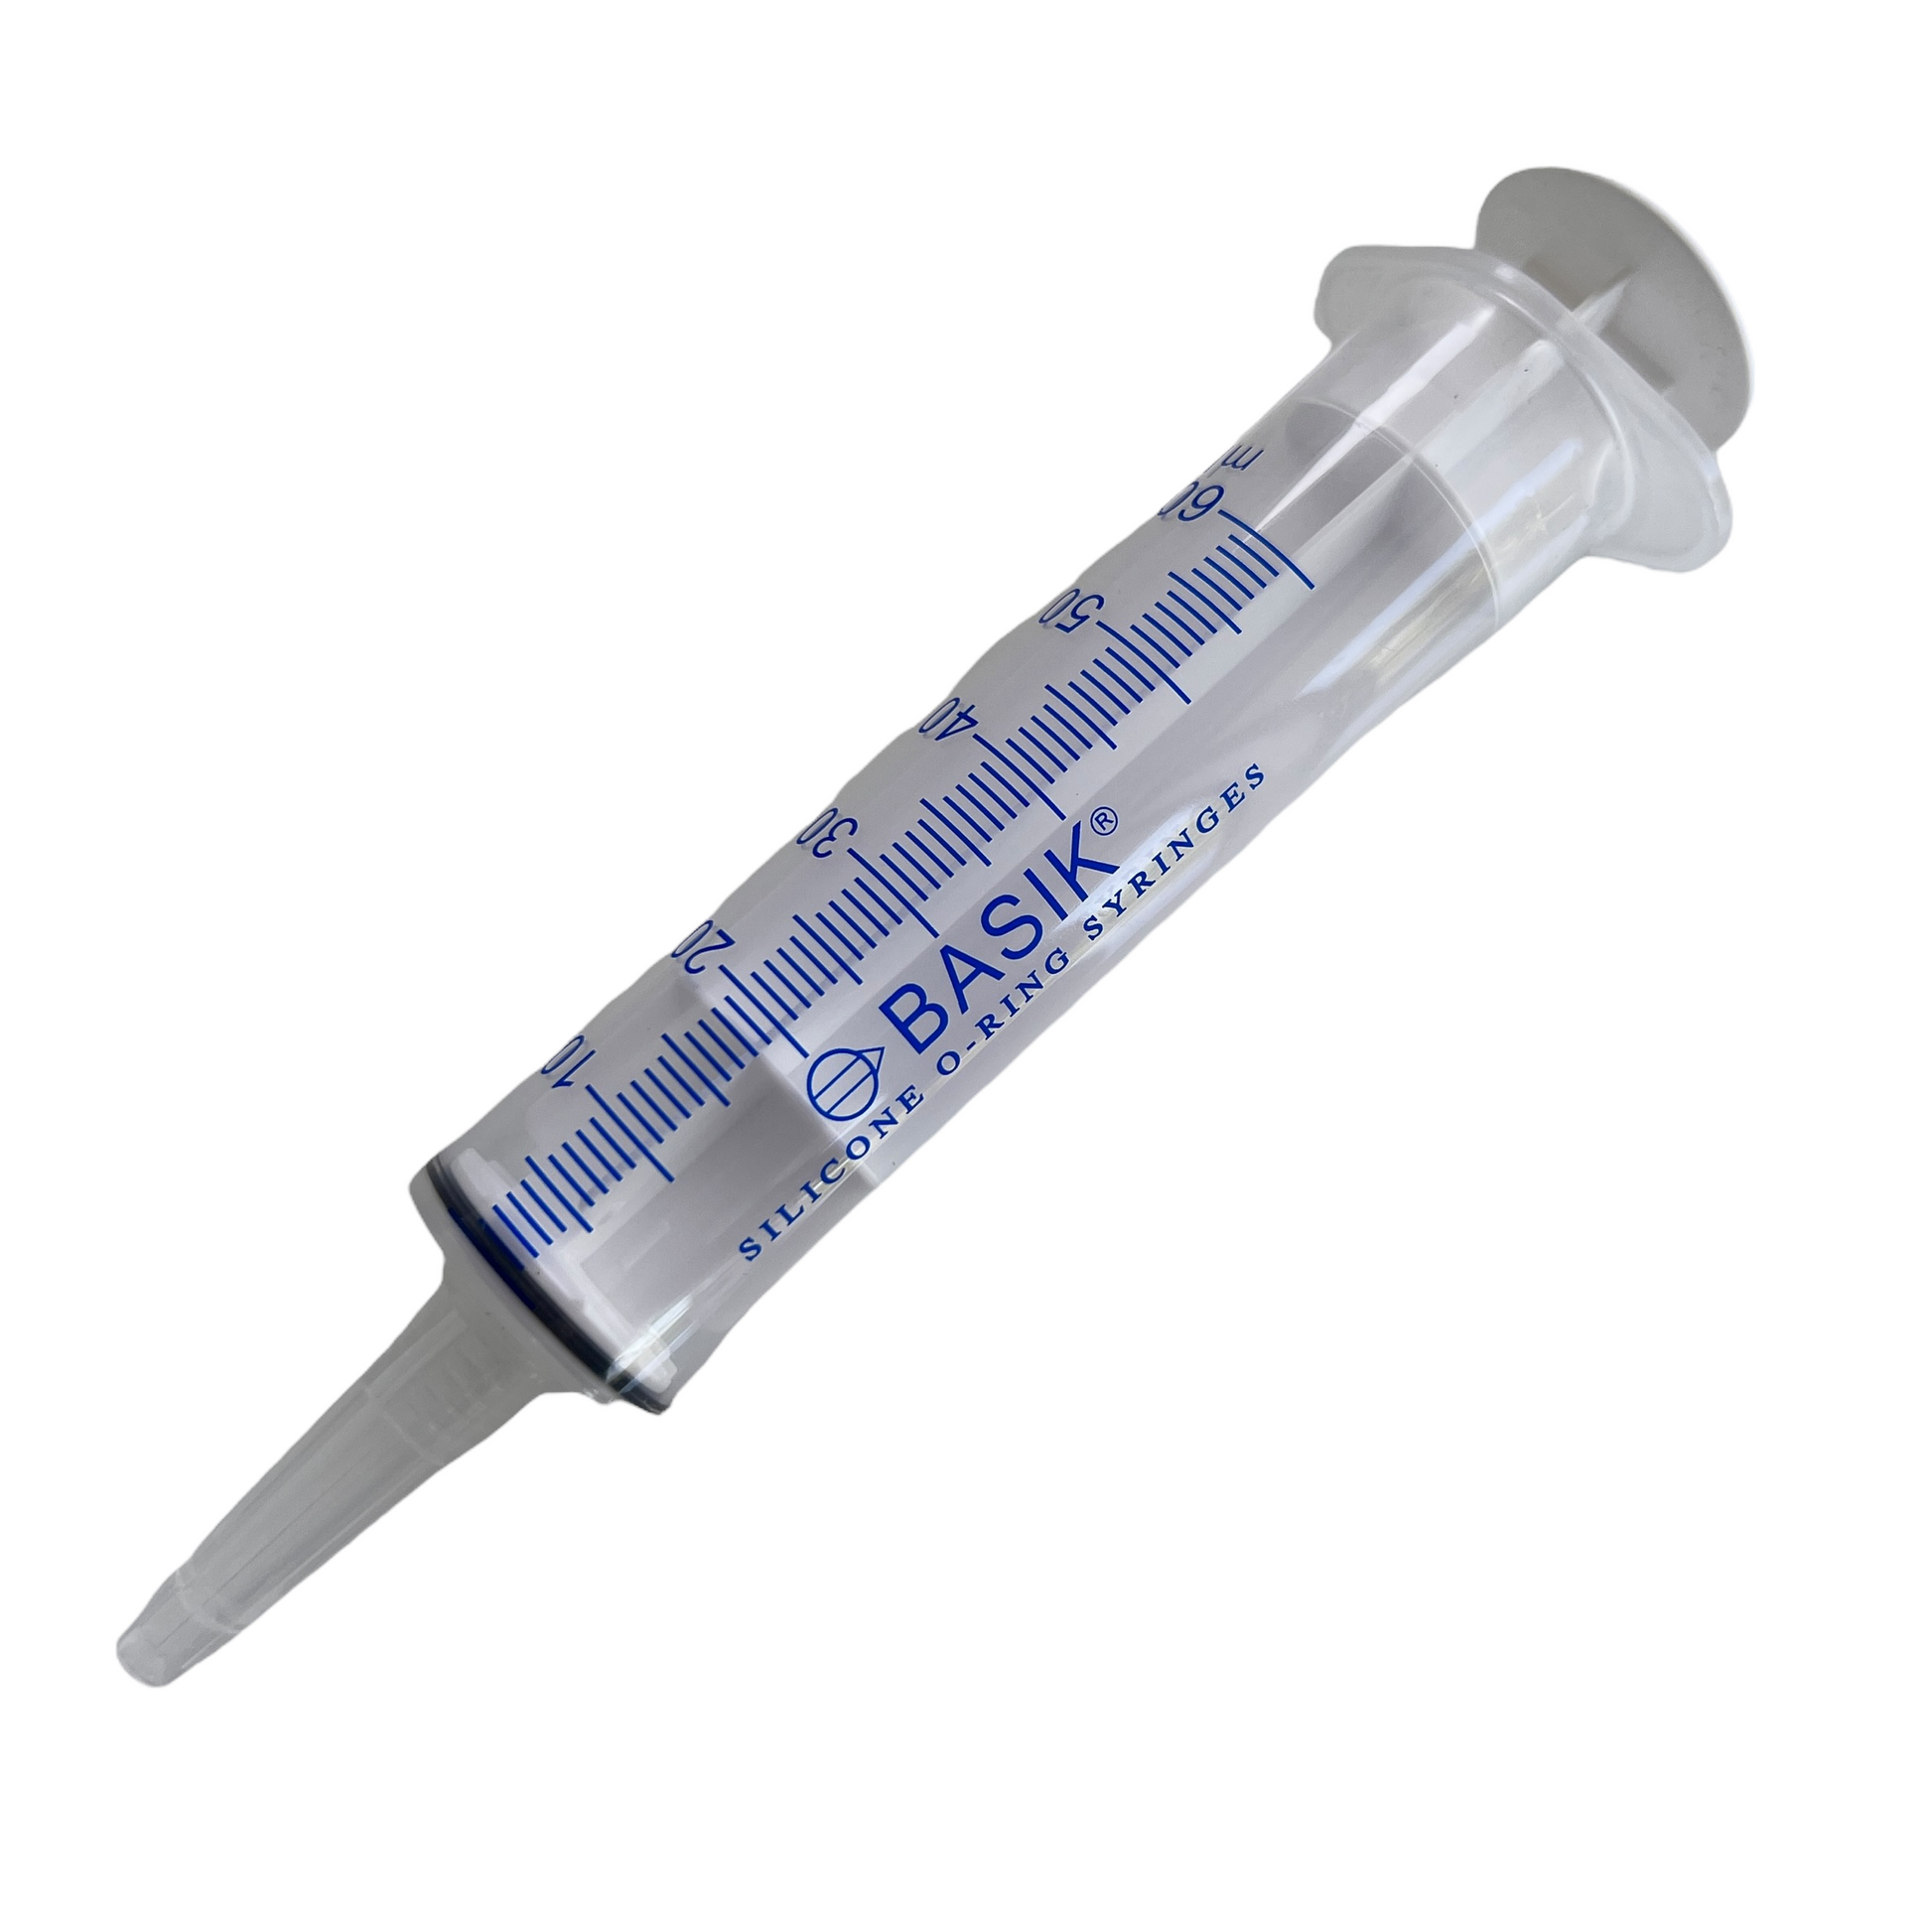 60ml Reusable Catheter Tip Syringe (Basik O-Ring)  SPIRIT SPARKPLUGS   